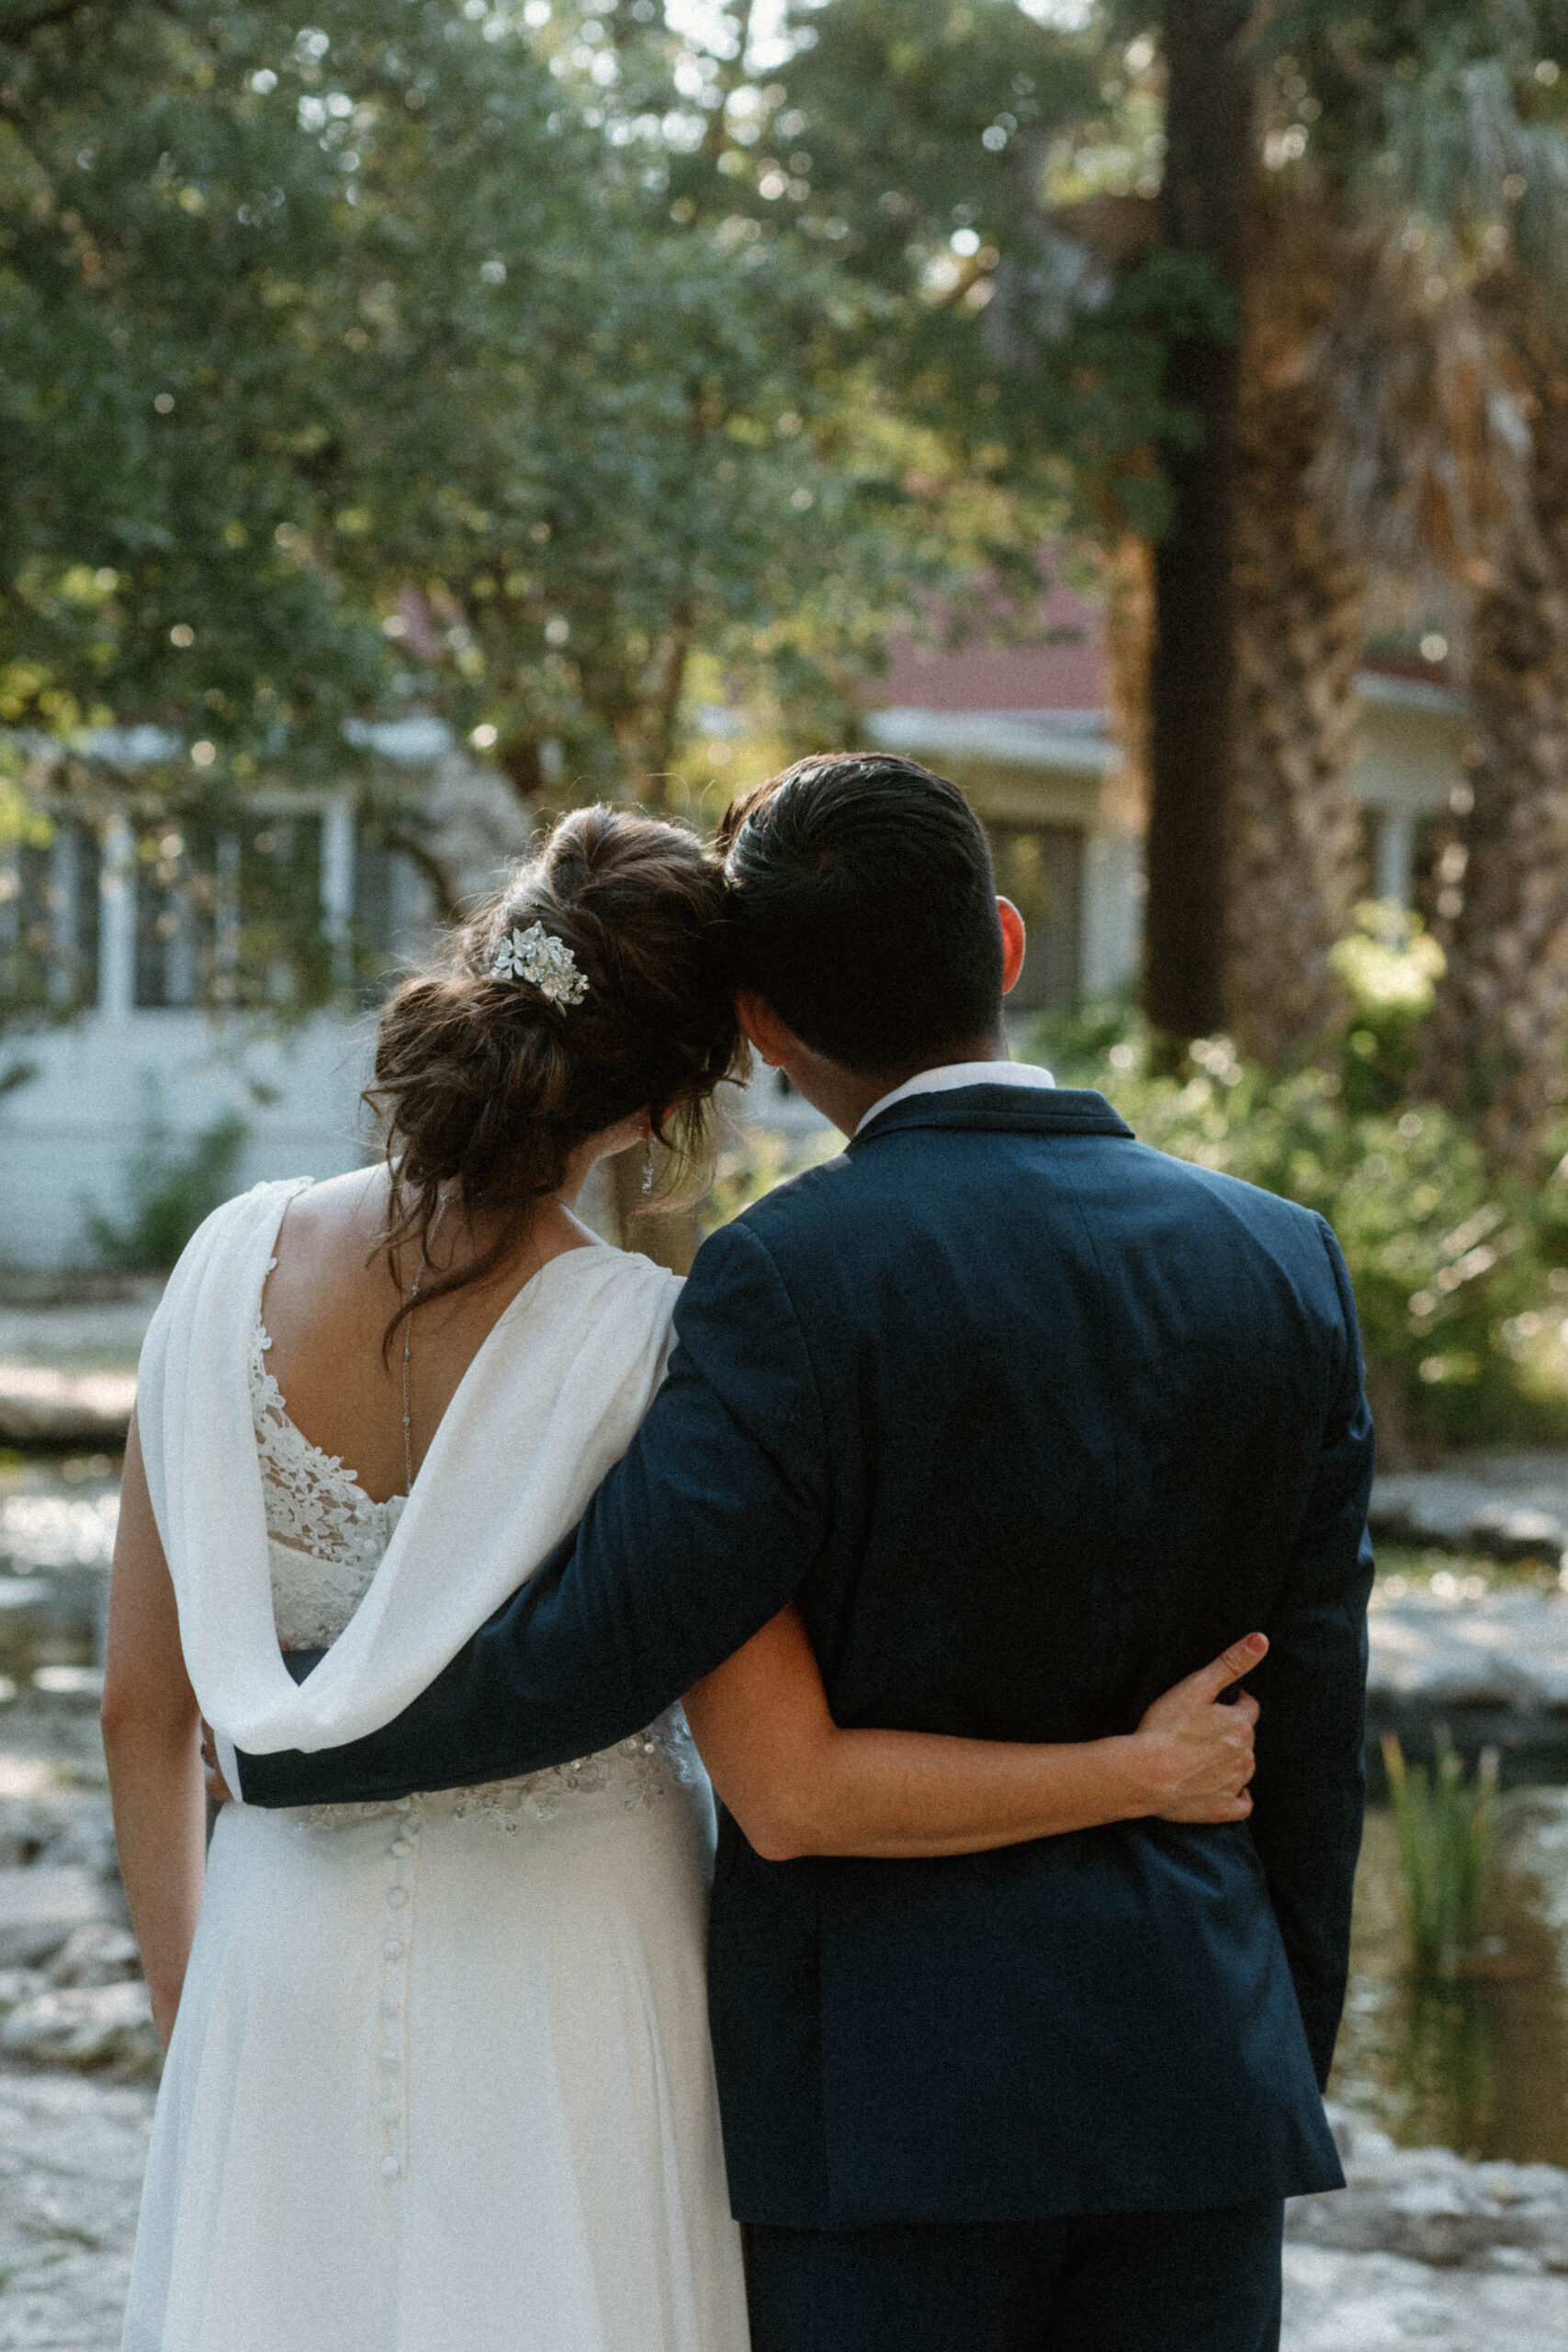 Wedding photograph taken at an intimate Mayfield Garden wedding. Photograph by Bare Moments Photography. Taken during the summer in Austin, Texas. 